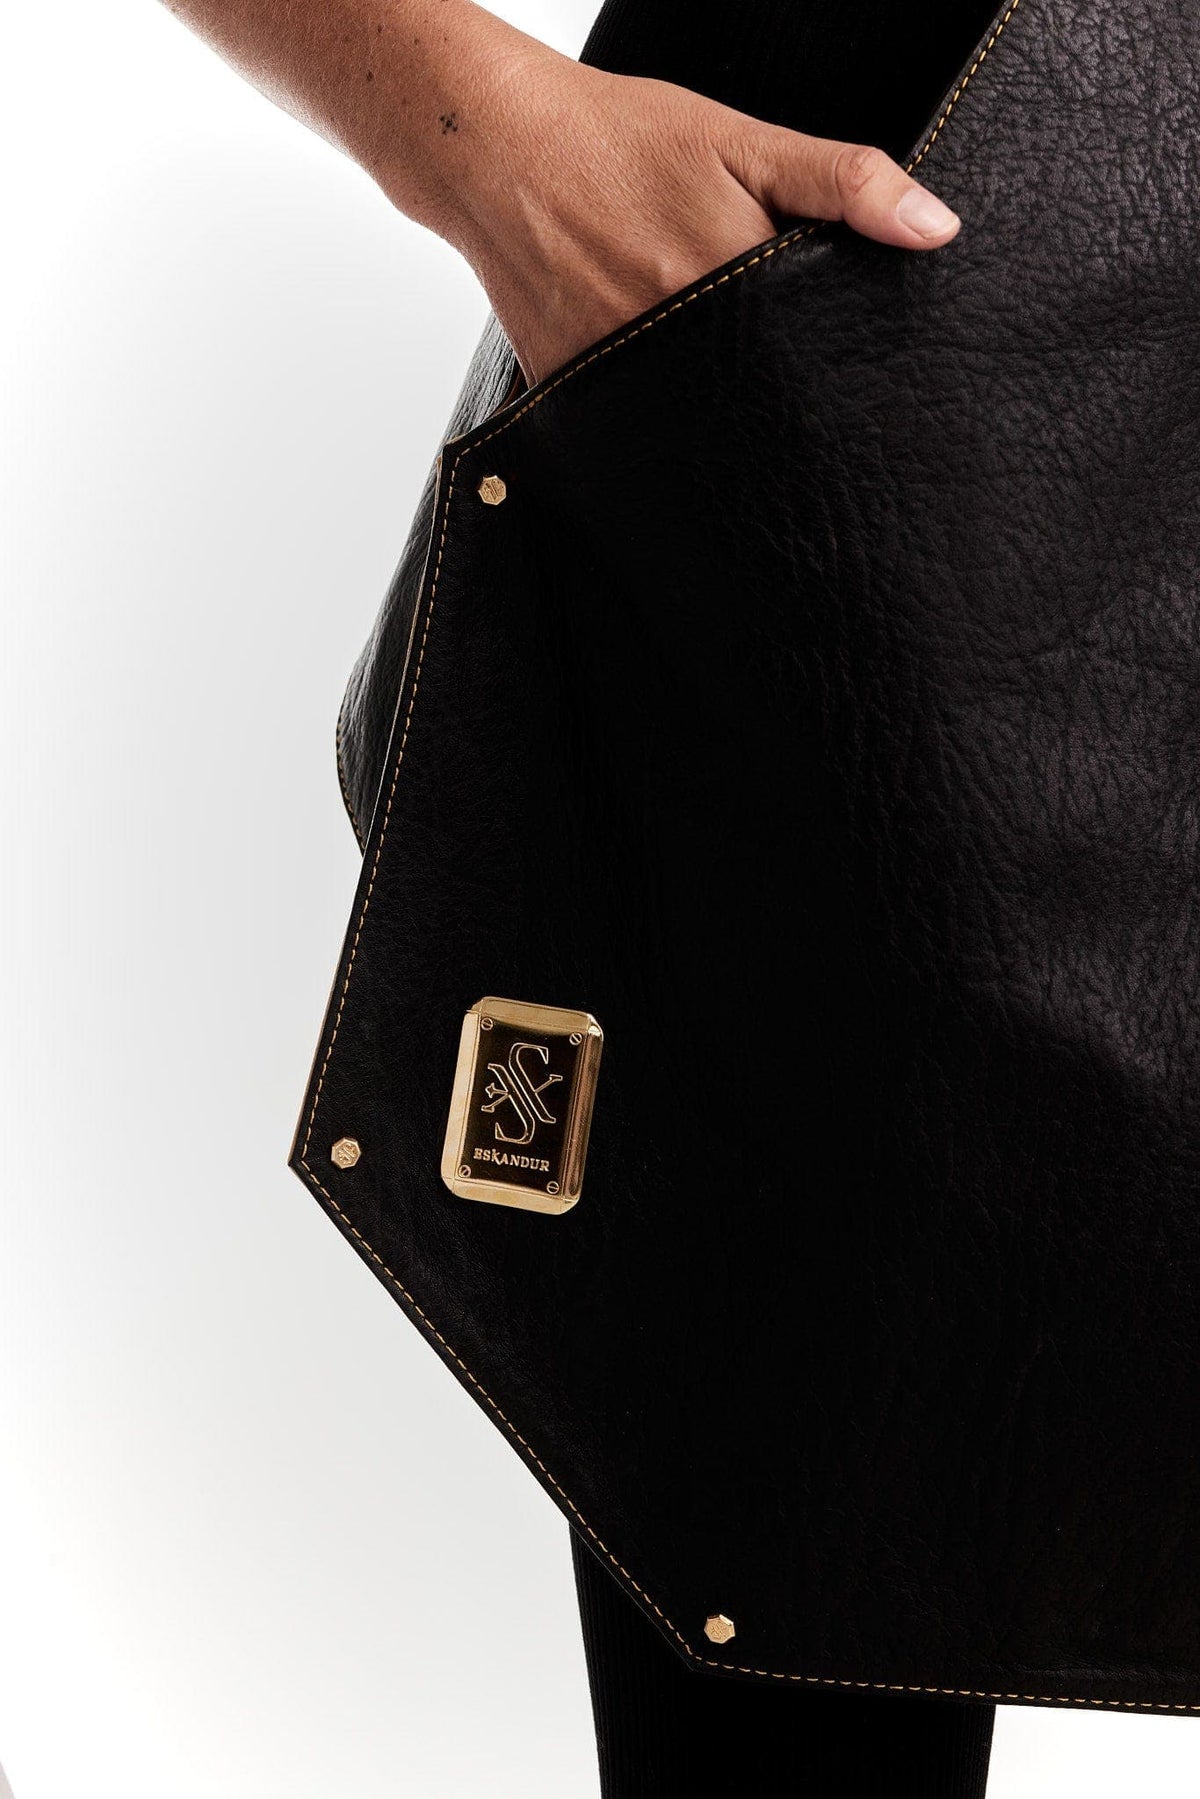 Eskandur women&#39;s black leather luxury premium apron zoom on right hand in the pocket gold logo plate black clothes